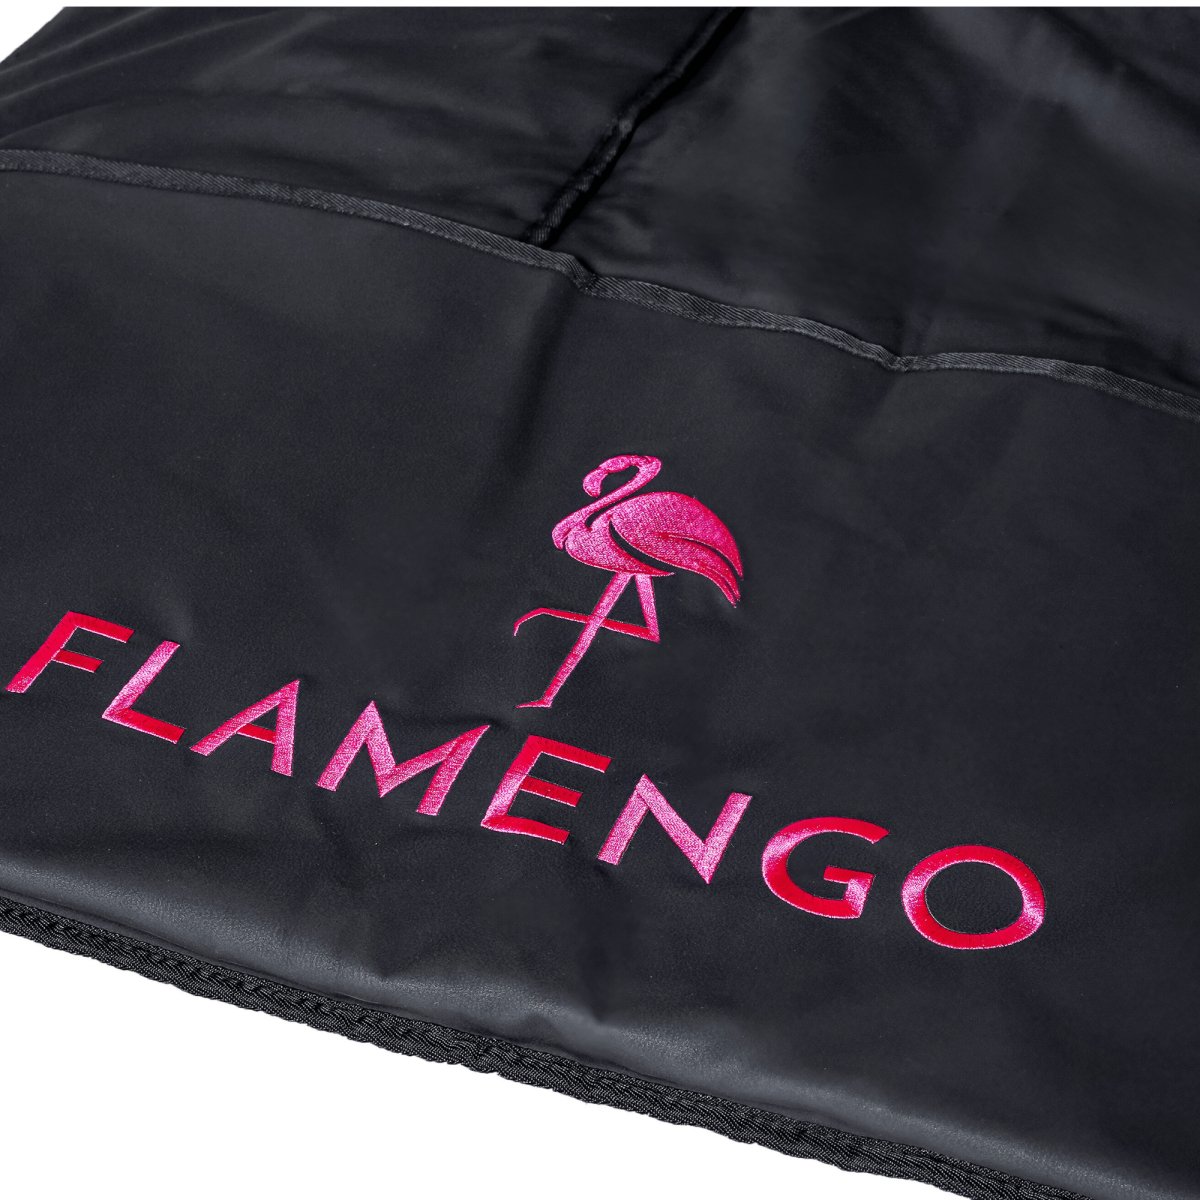 Flamengo infrared sauna blanket